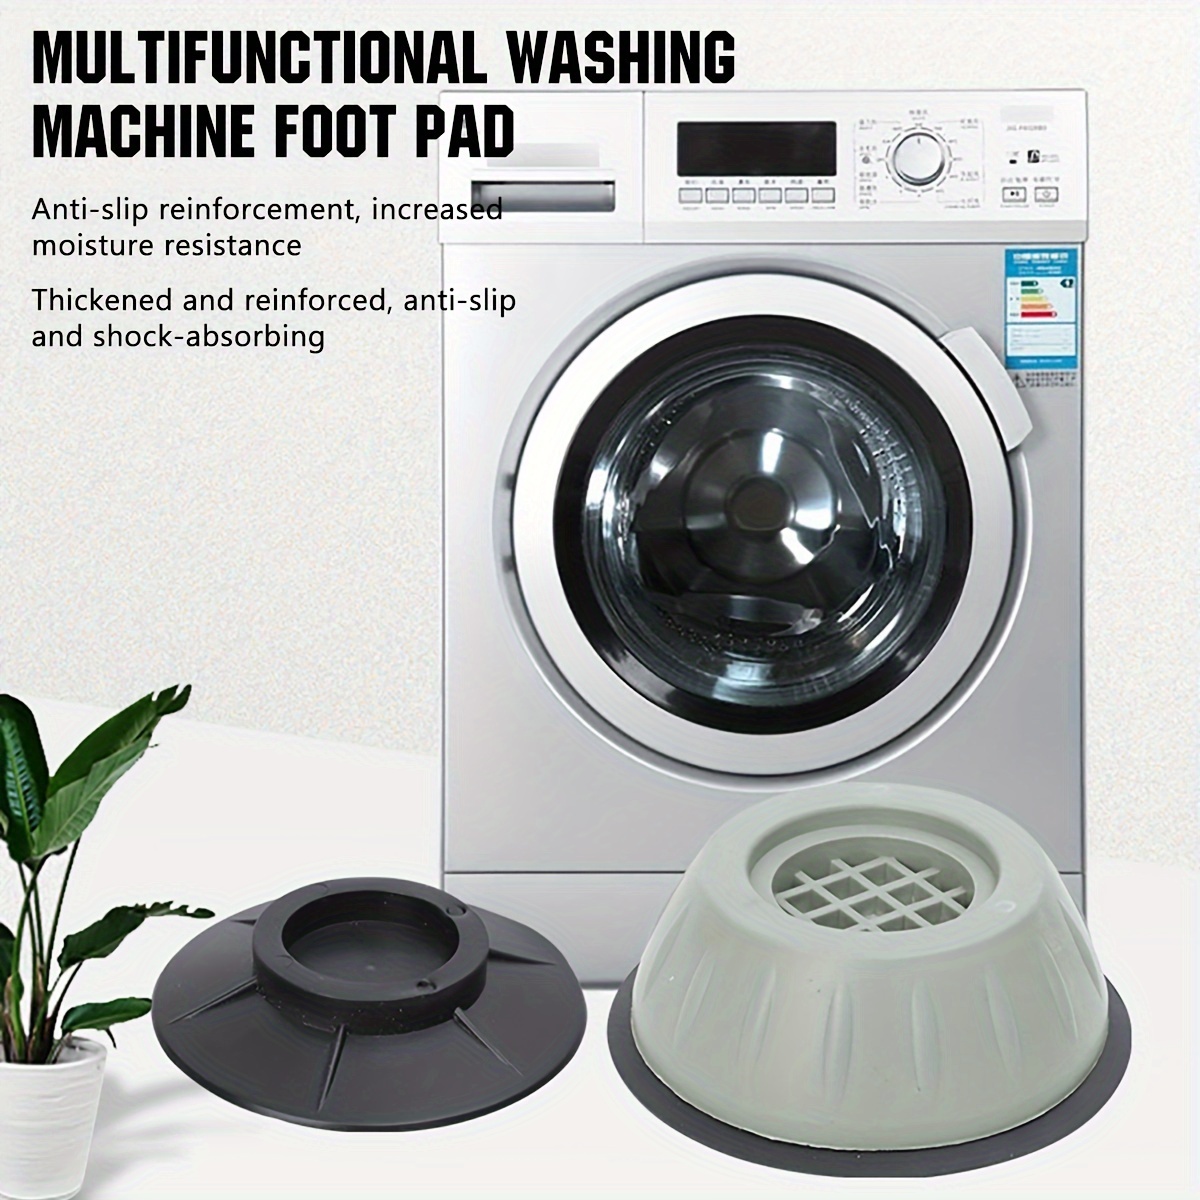 4Pcs Square Anti Vibration Pad Washing Machine Shock Pad